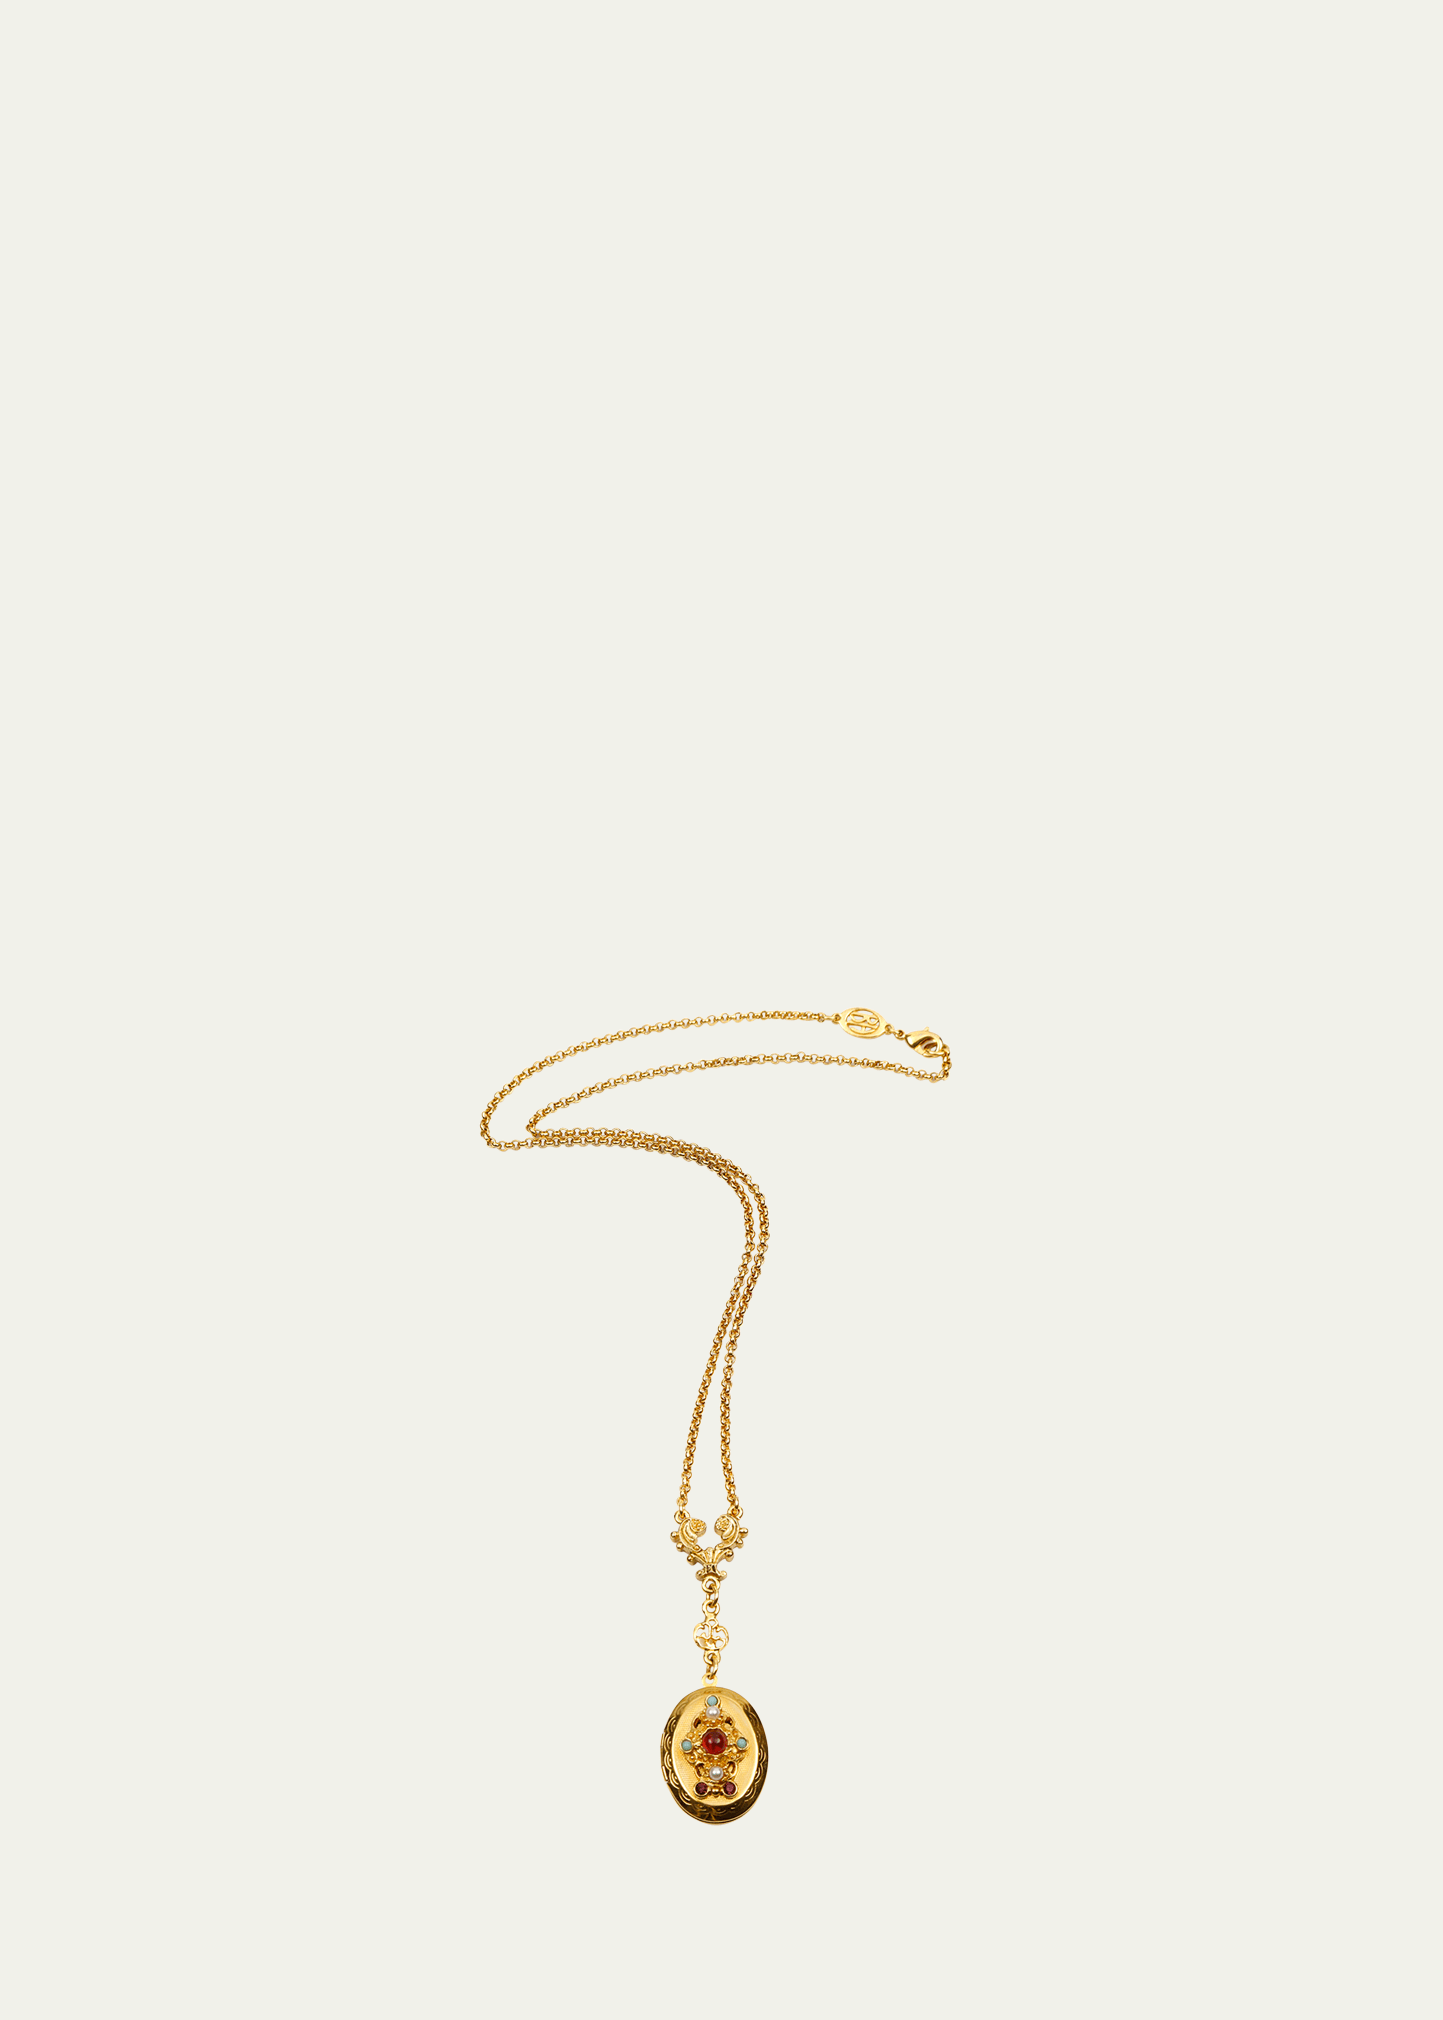 Jeweled Oval Locket Necklace